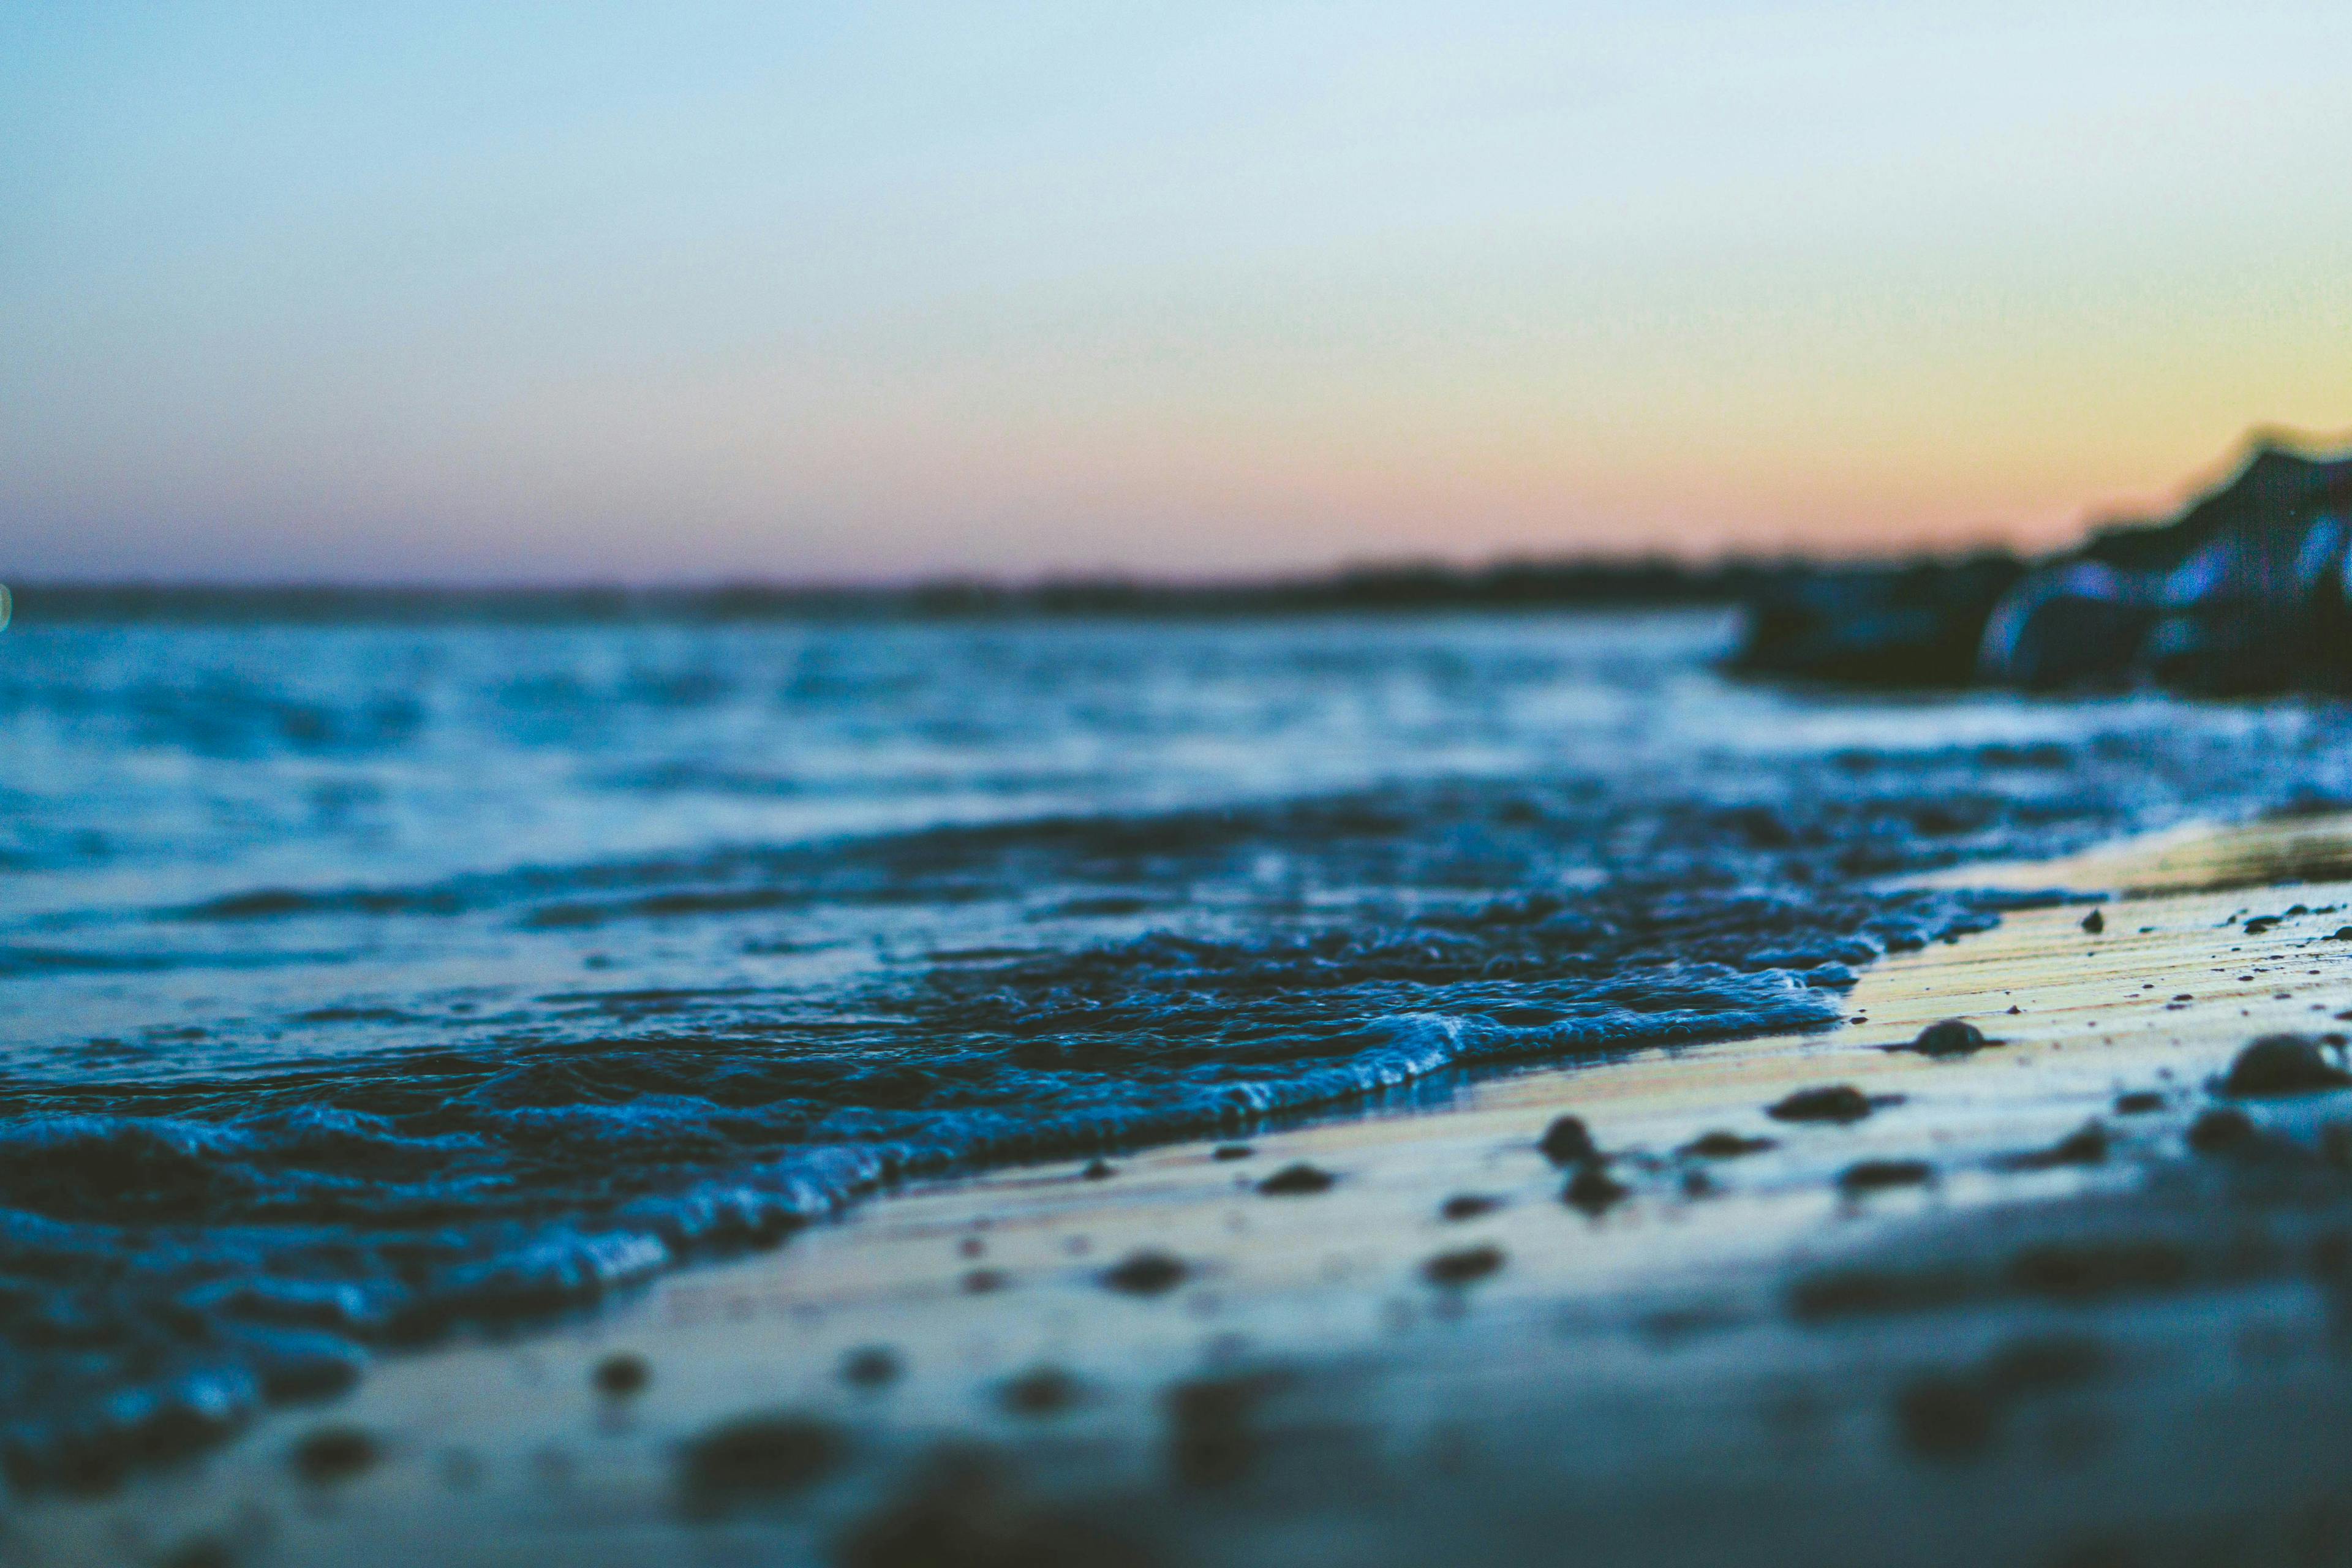 Photograph of a shoreline at sunset. Photo by Derek Story via Unsplash.